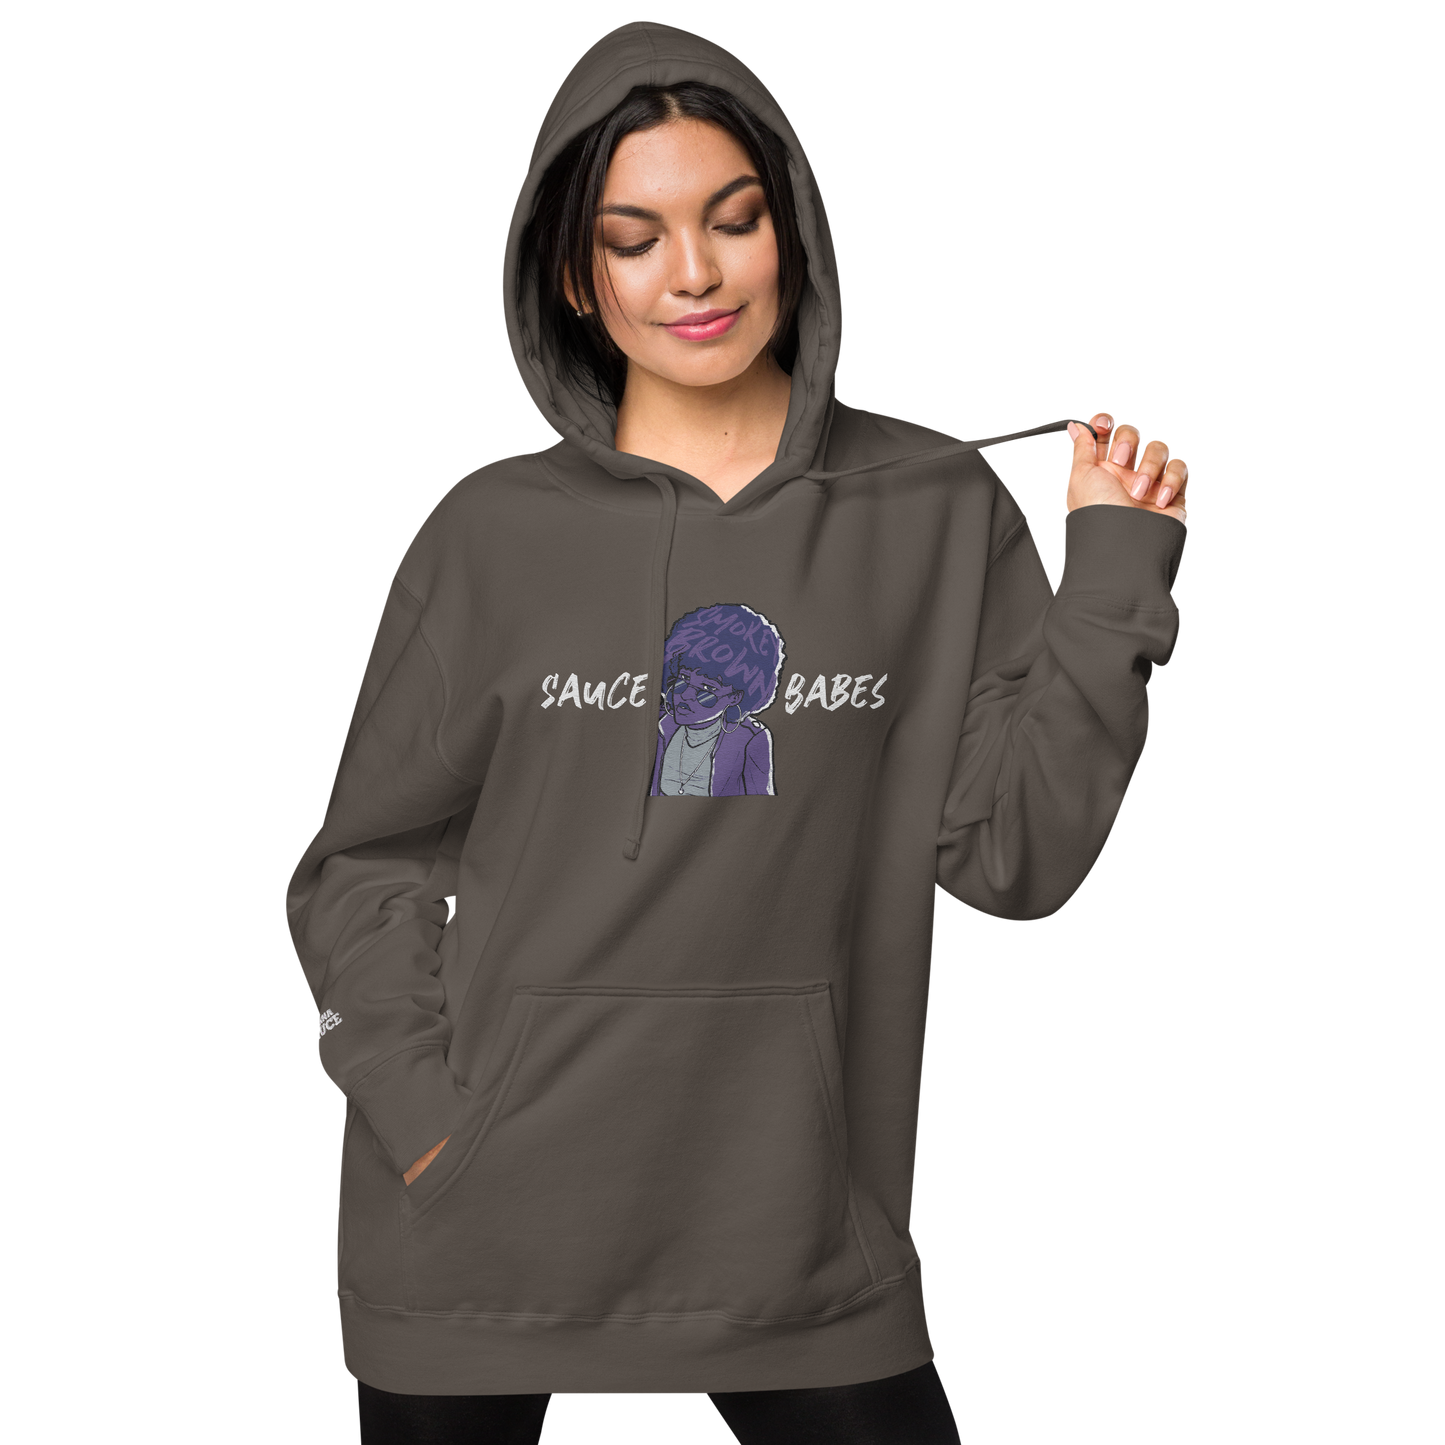 Unisex Sauce Babes hoodie